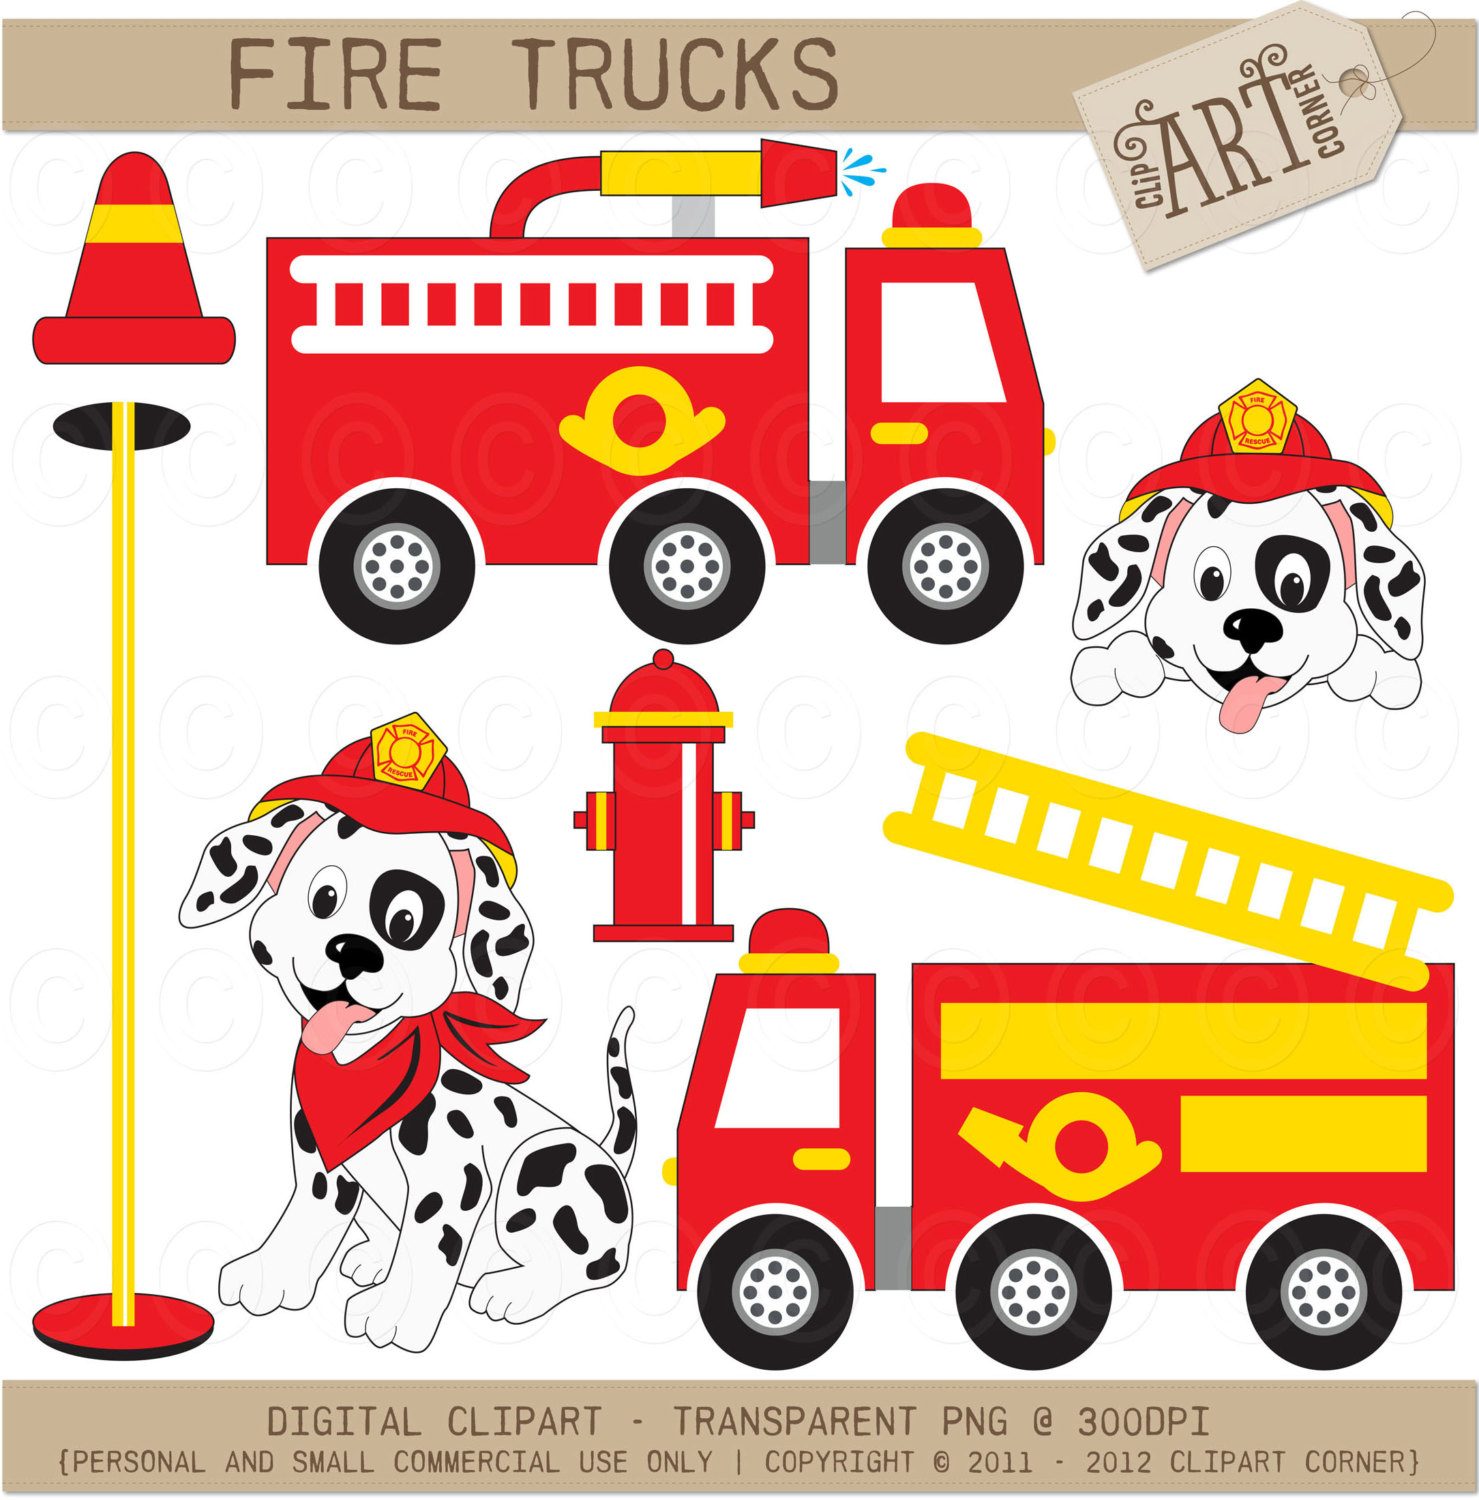 Digital Clipart   Fire Trucks   Fire Engine   Dalmation  Dc 8350 